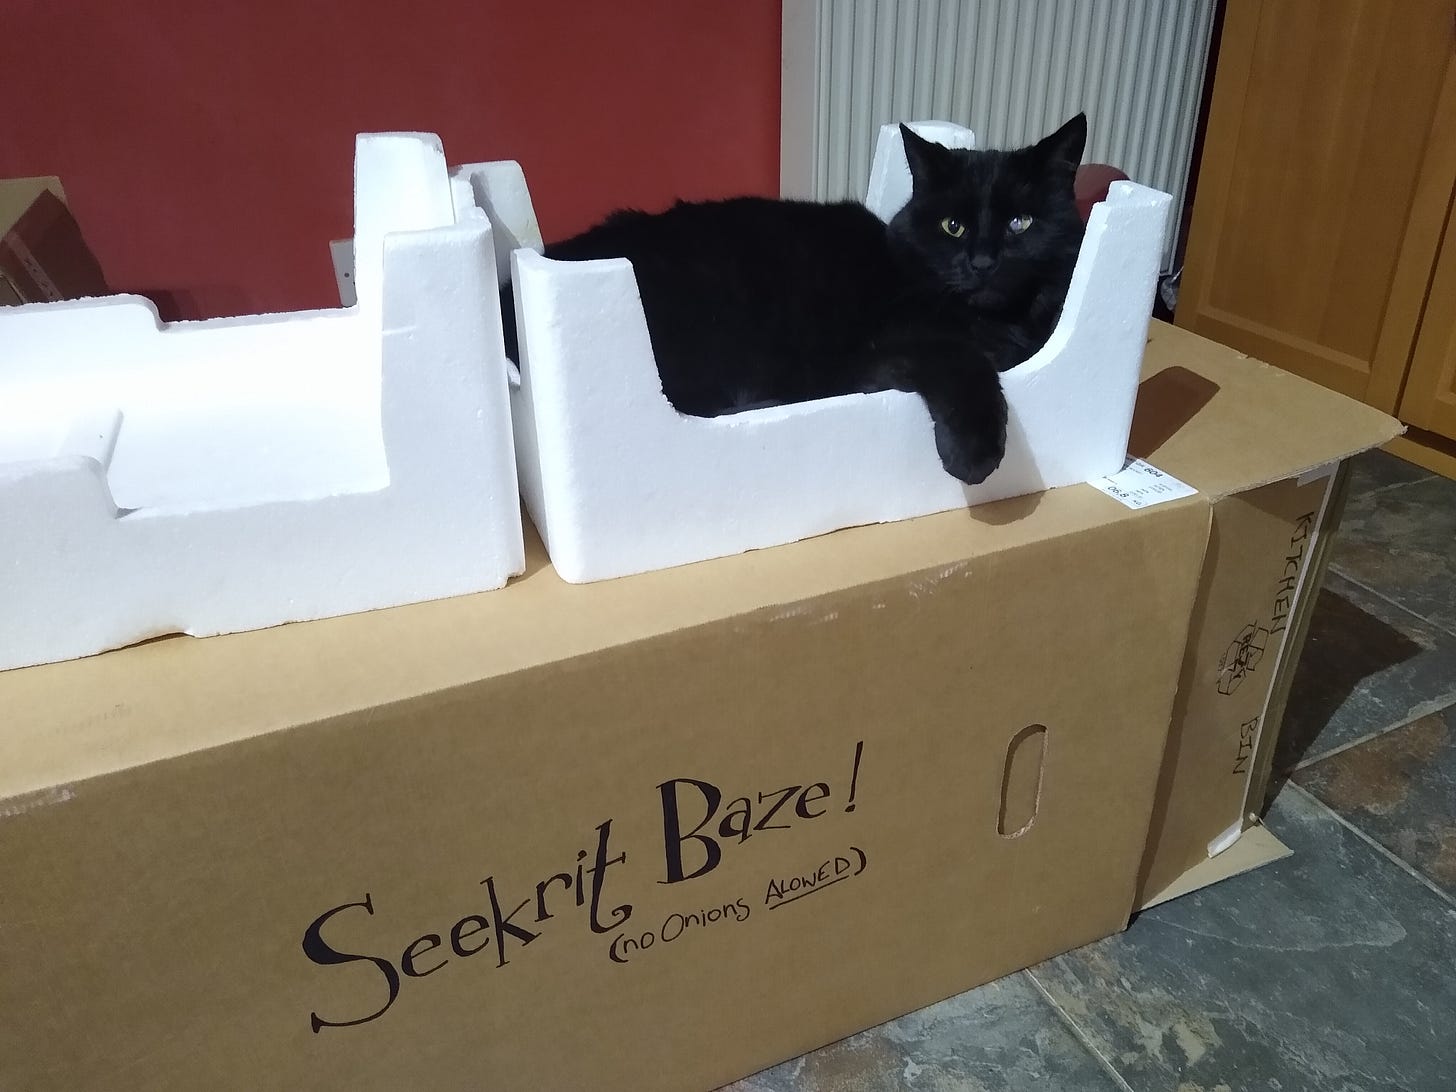 A little black cat lounged atop her cardboard Seekrit Baze!